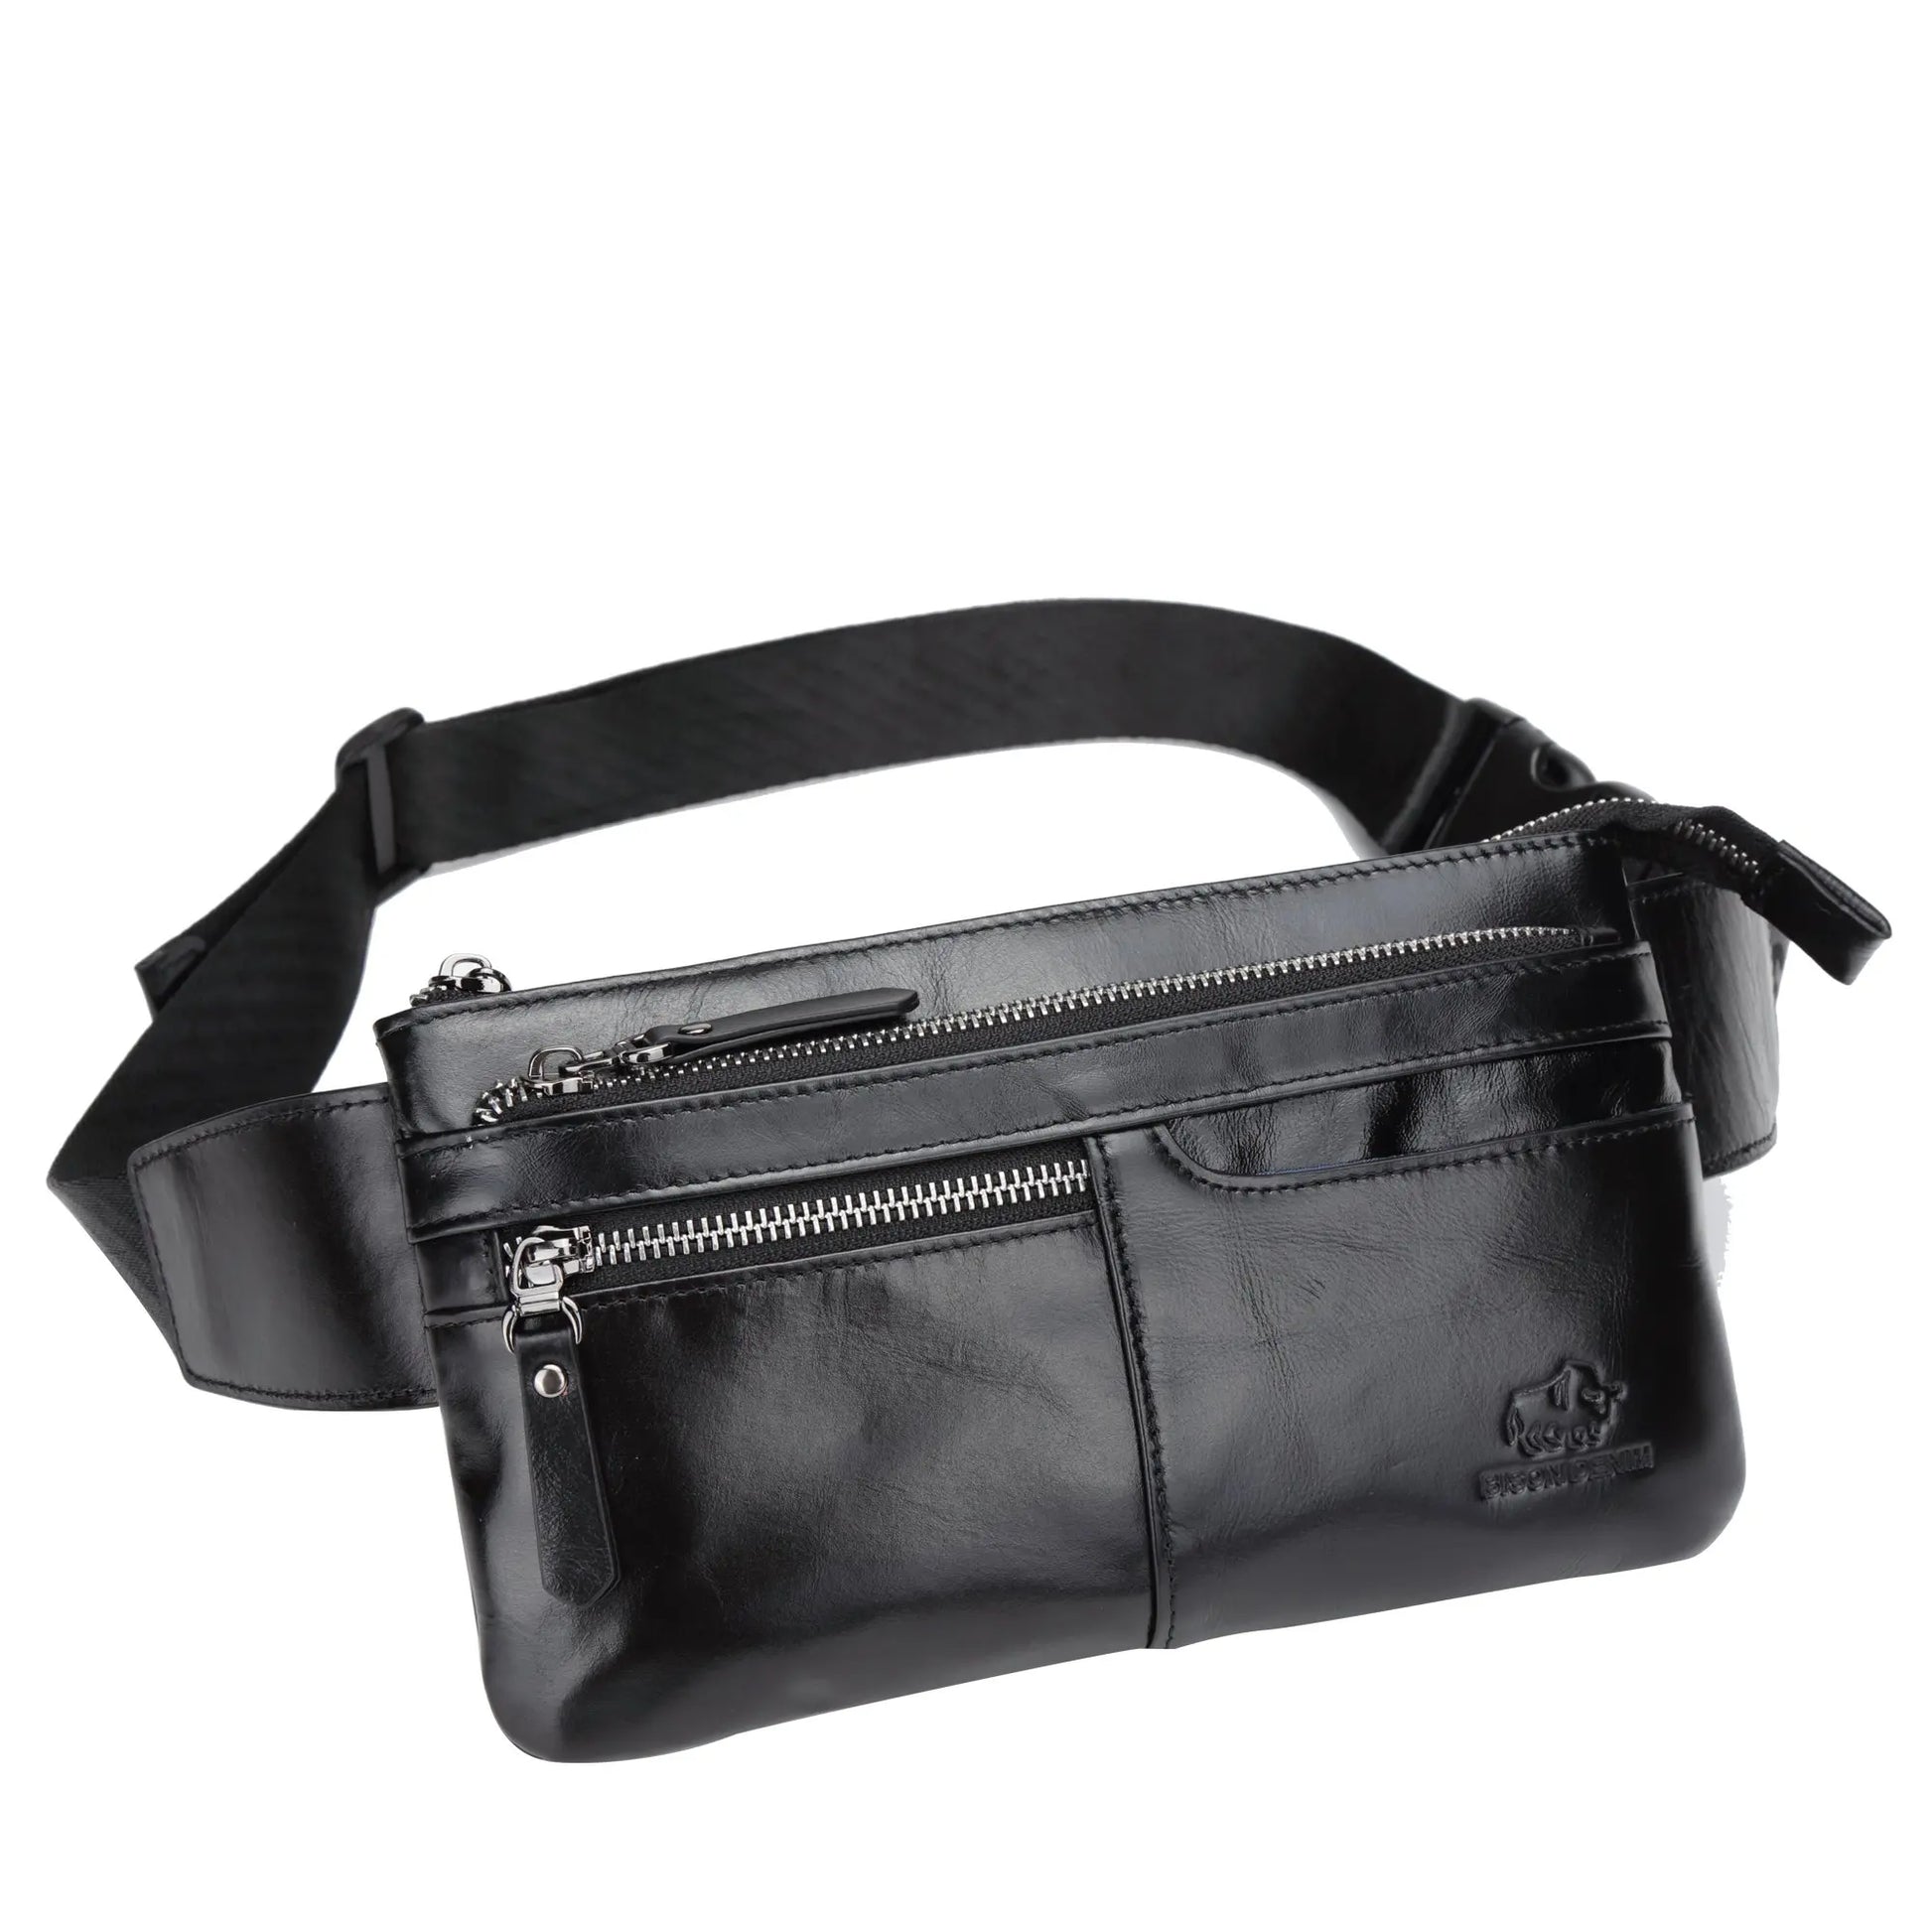 BISON DENIM Leather Waist Bag Cell Phone Bags Men Women Travel Bag Retro Chest Purse Lightweight Casual Shoulder Bag